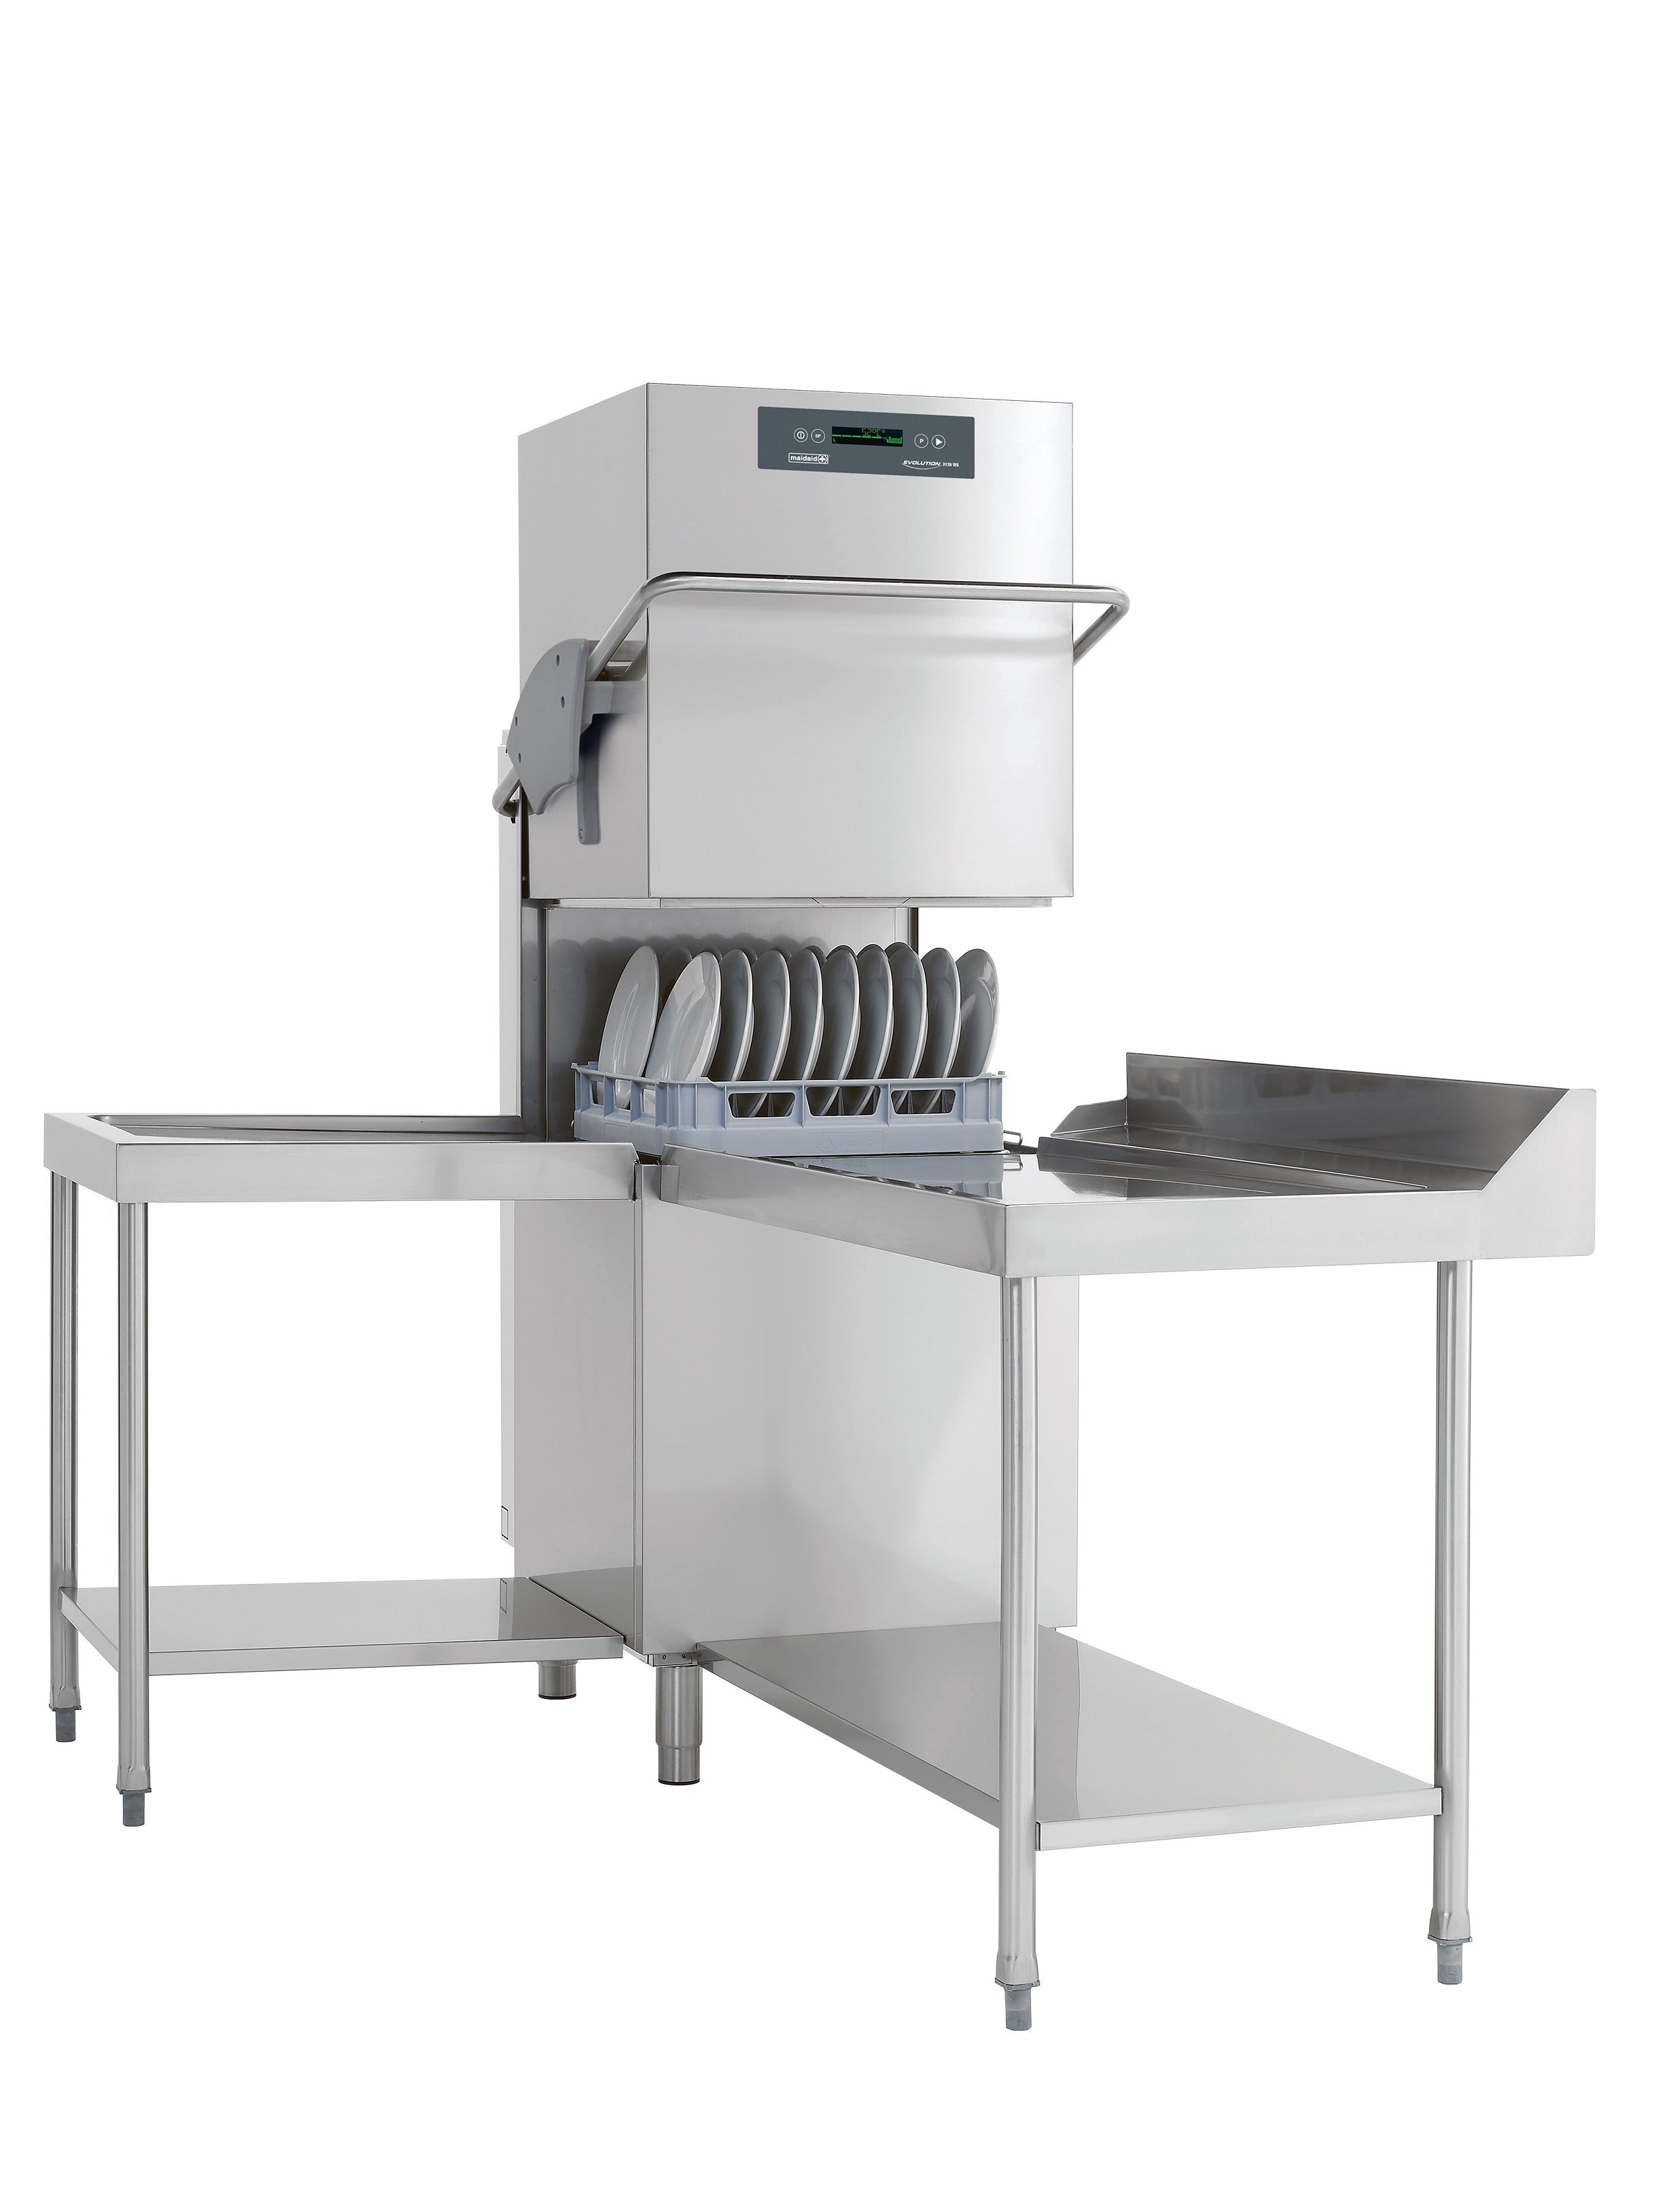 Maidaid EVO3135WS Pass Through Dishwasher JD Catering Equipment Solutions Ltd